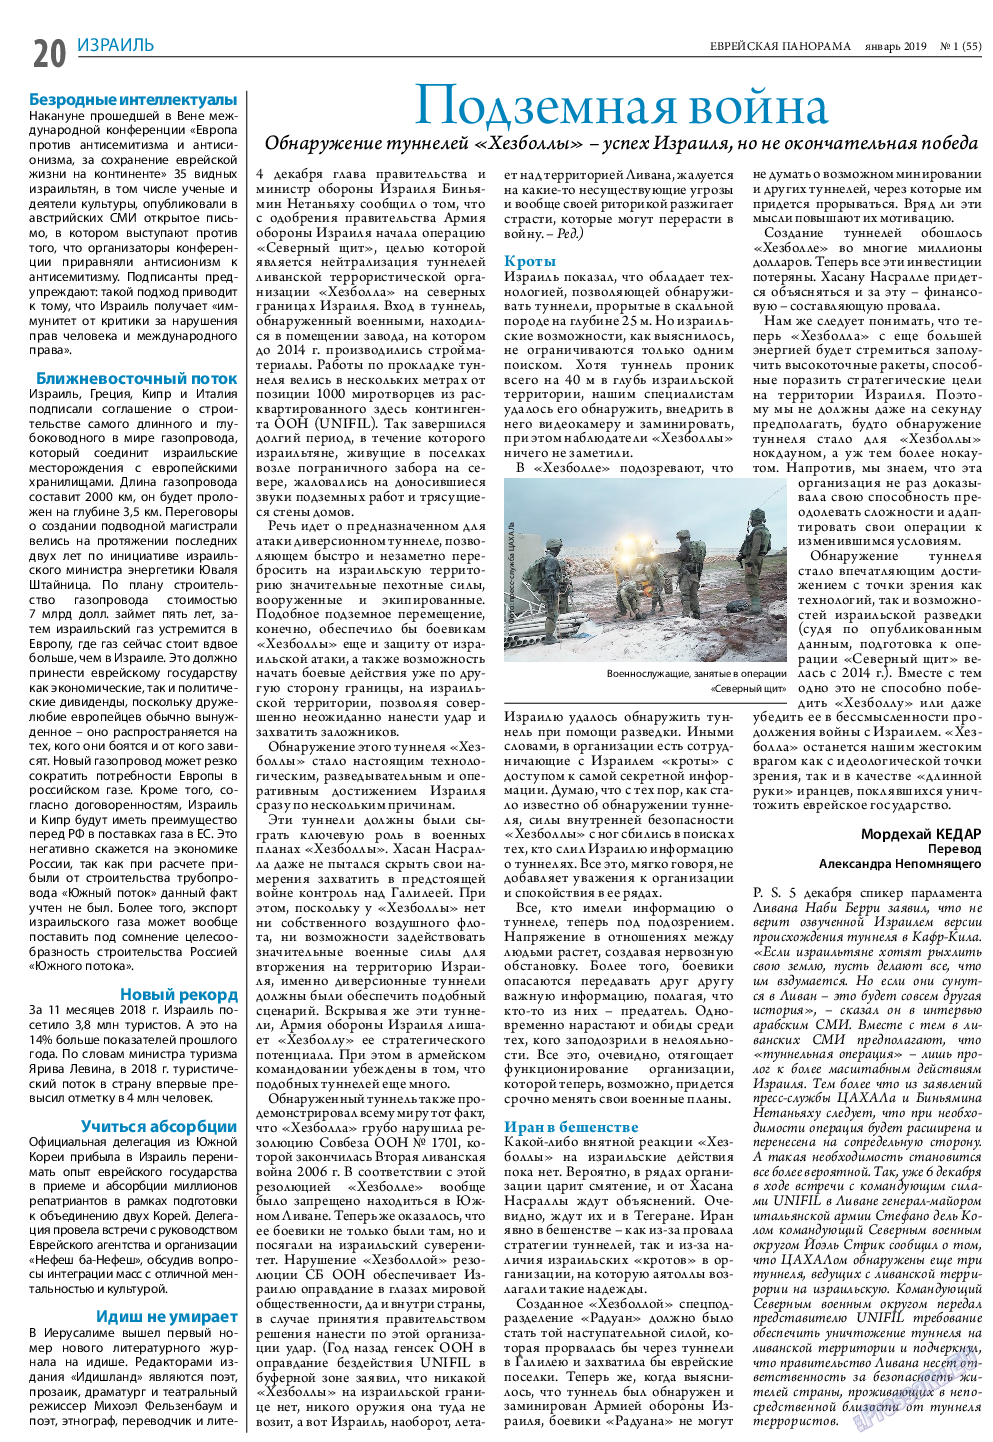 Еврейская панорама, газета. 2019 №1 стр.20